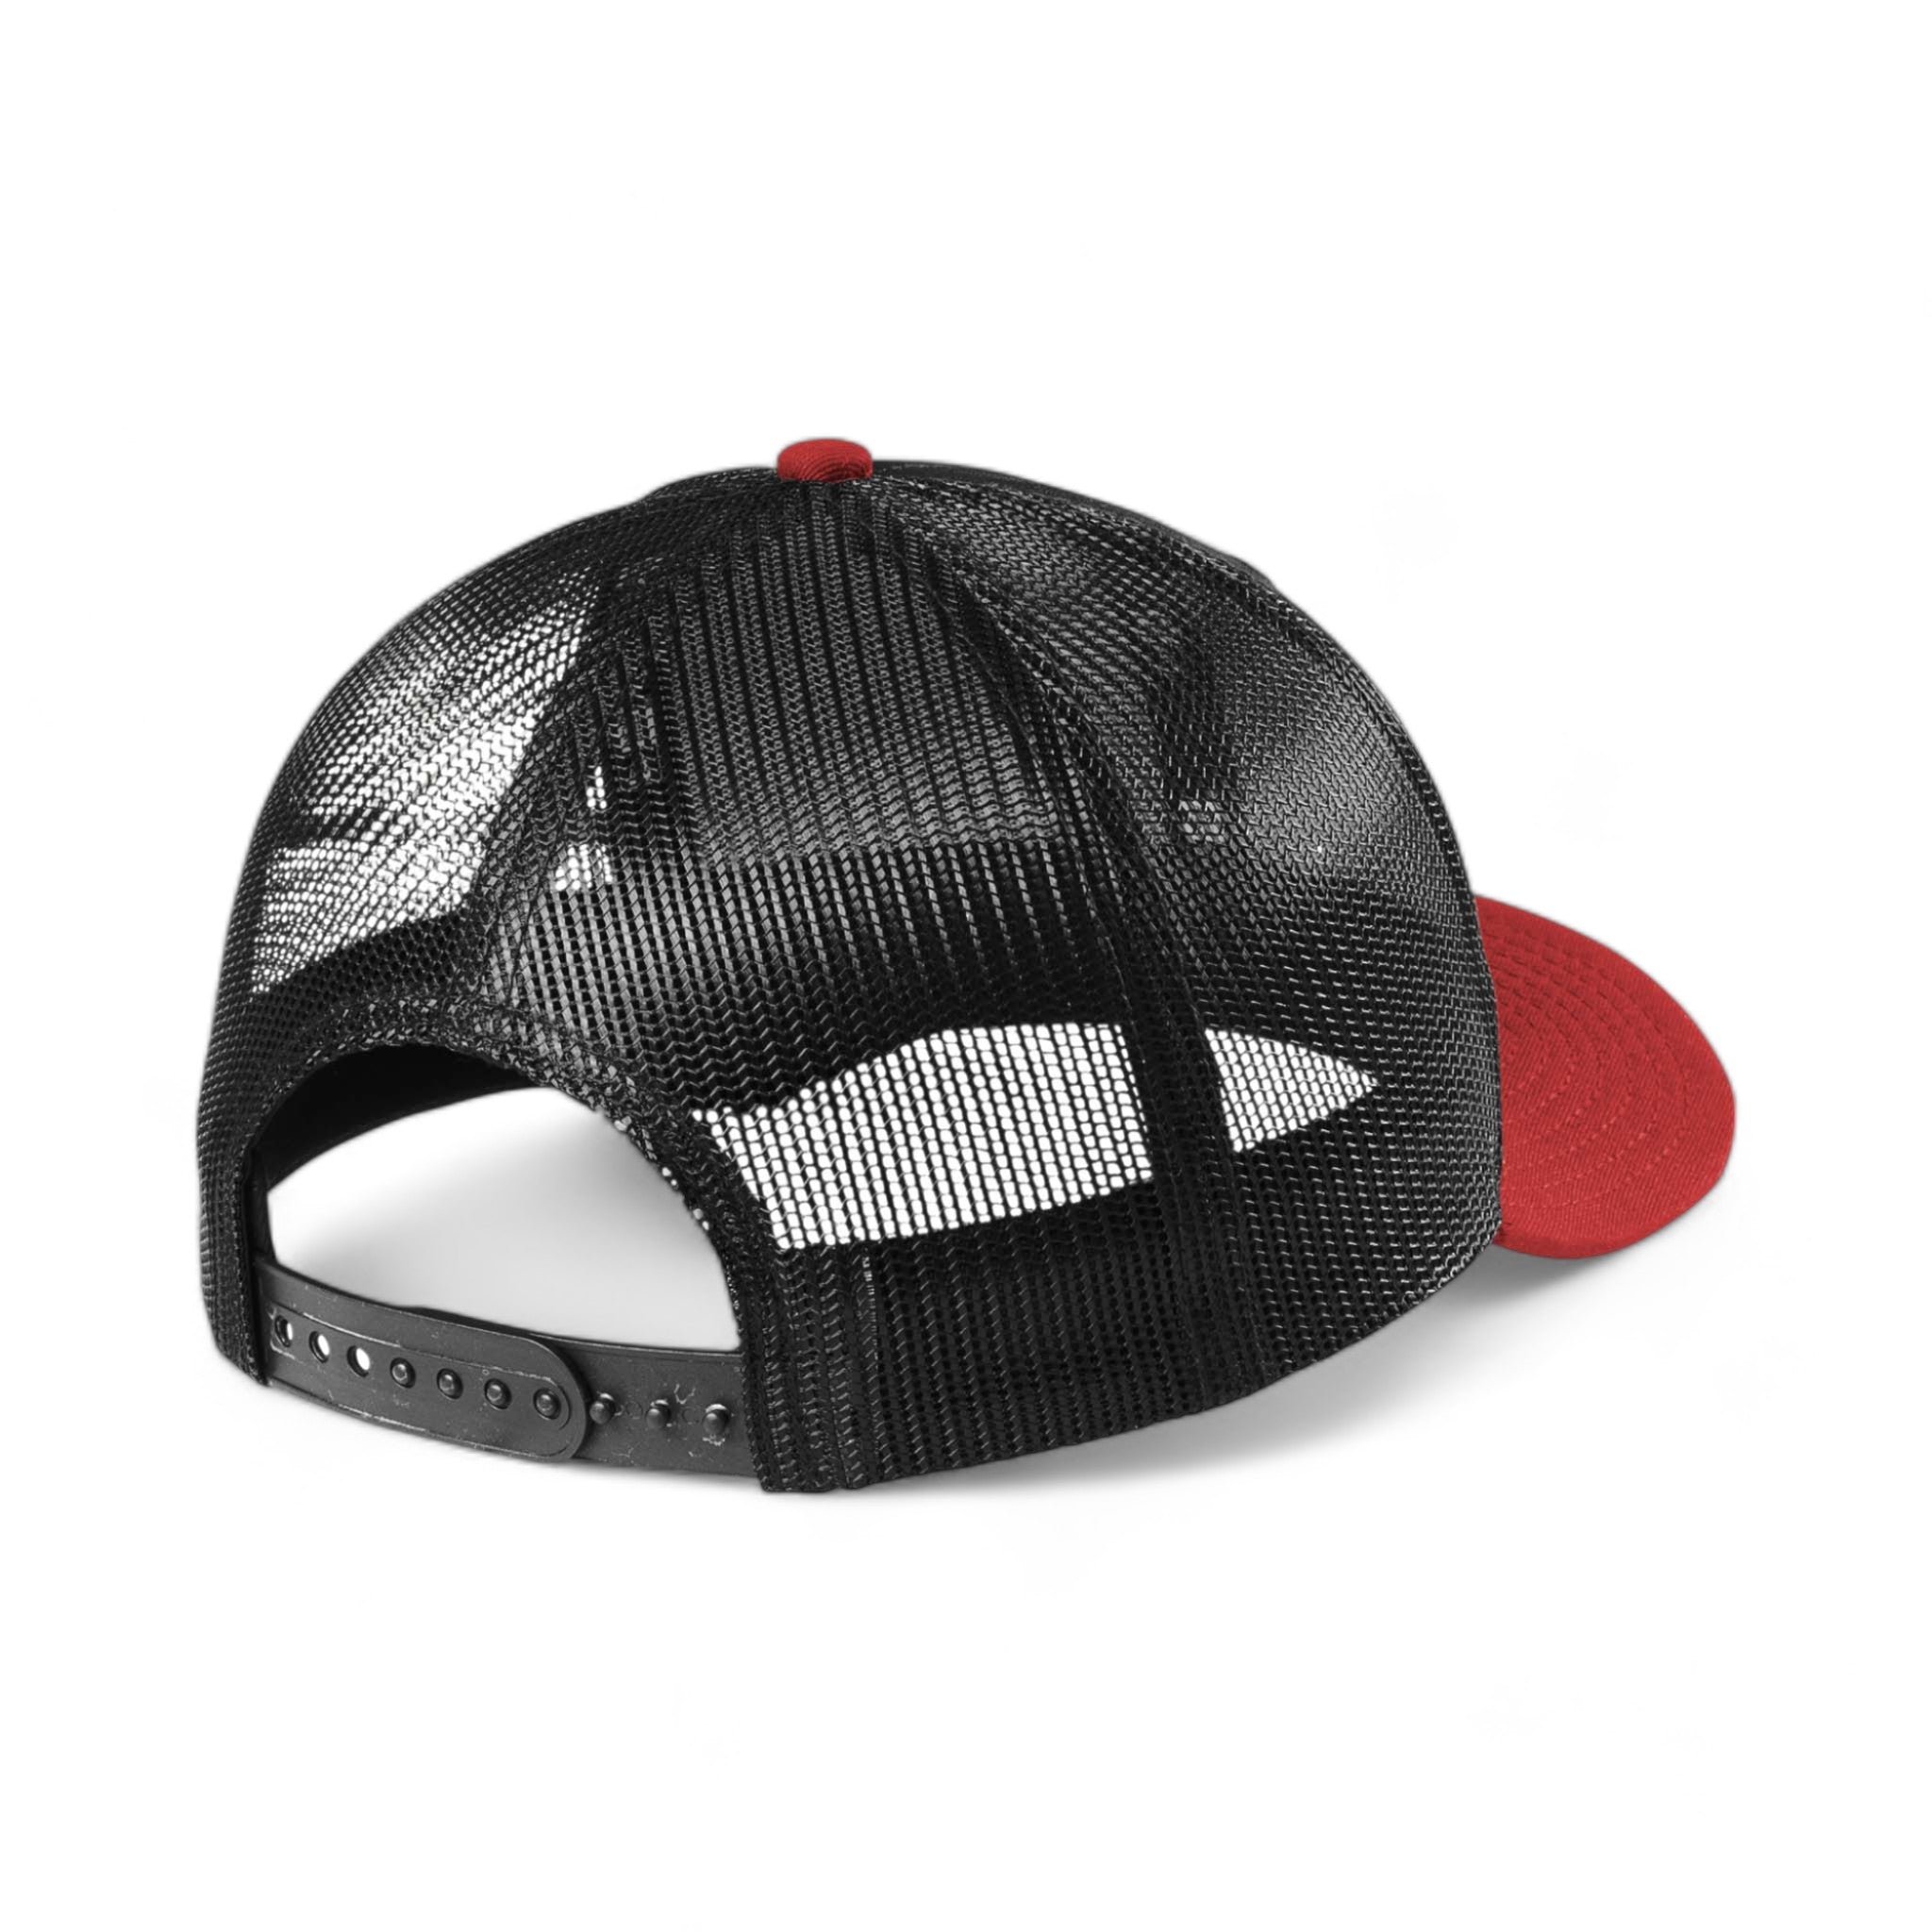 Back view of New Era NE207 custom hat in black and scarlet